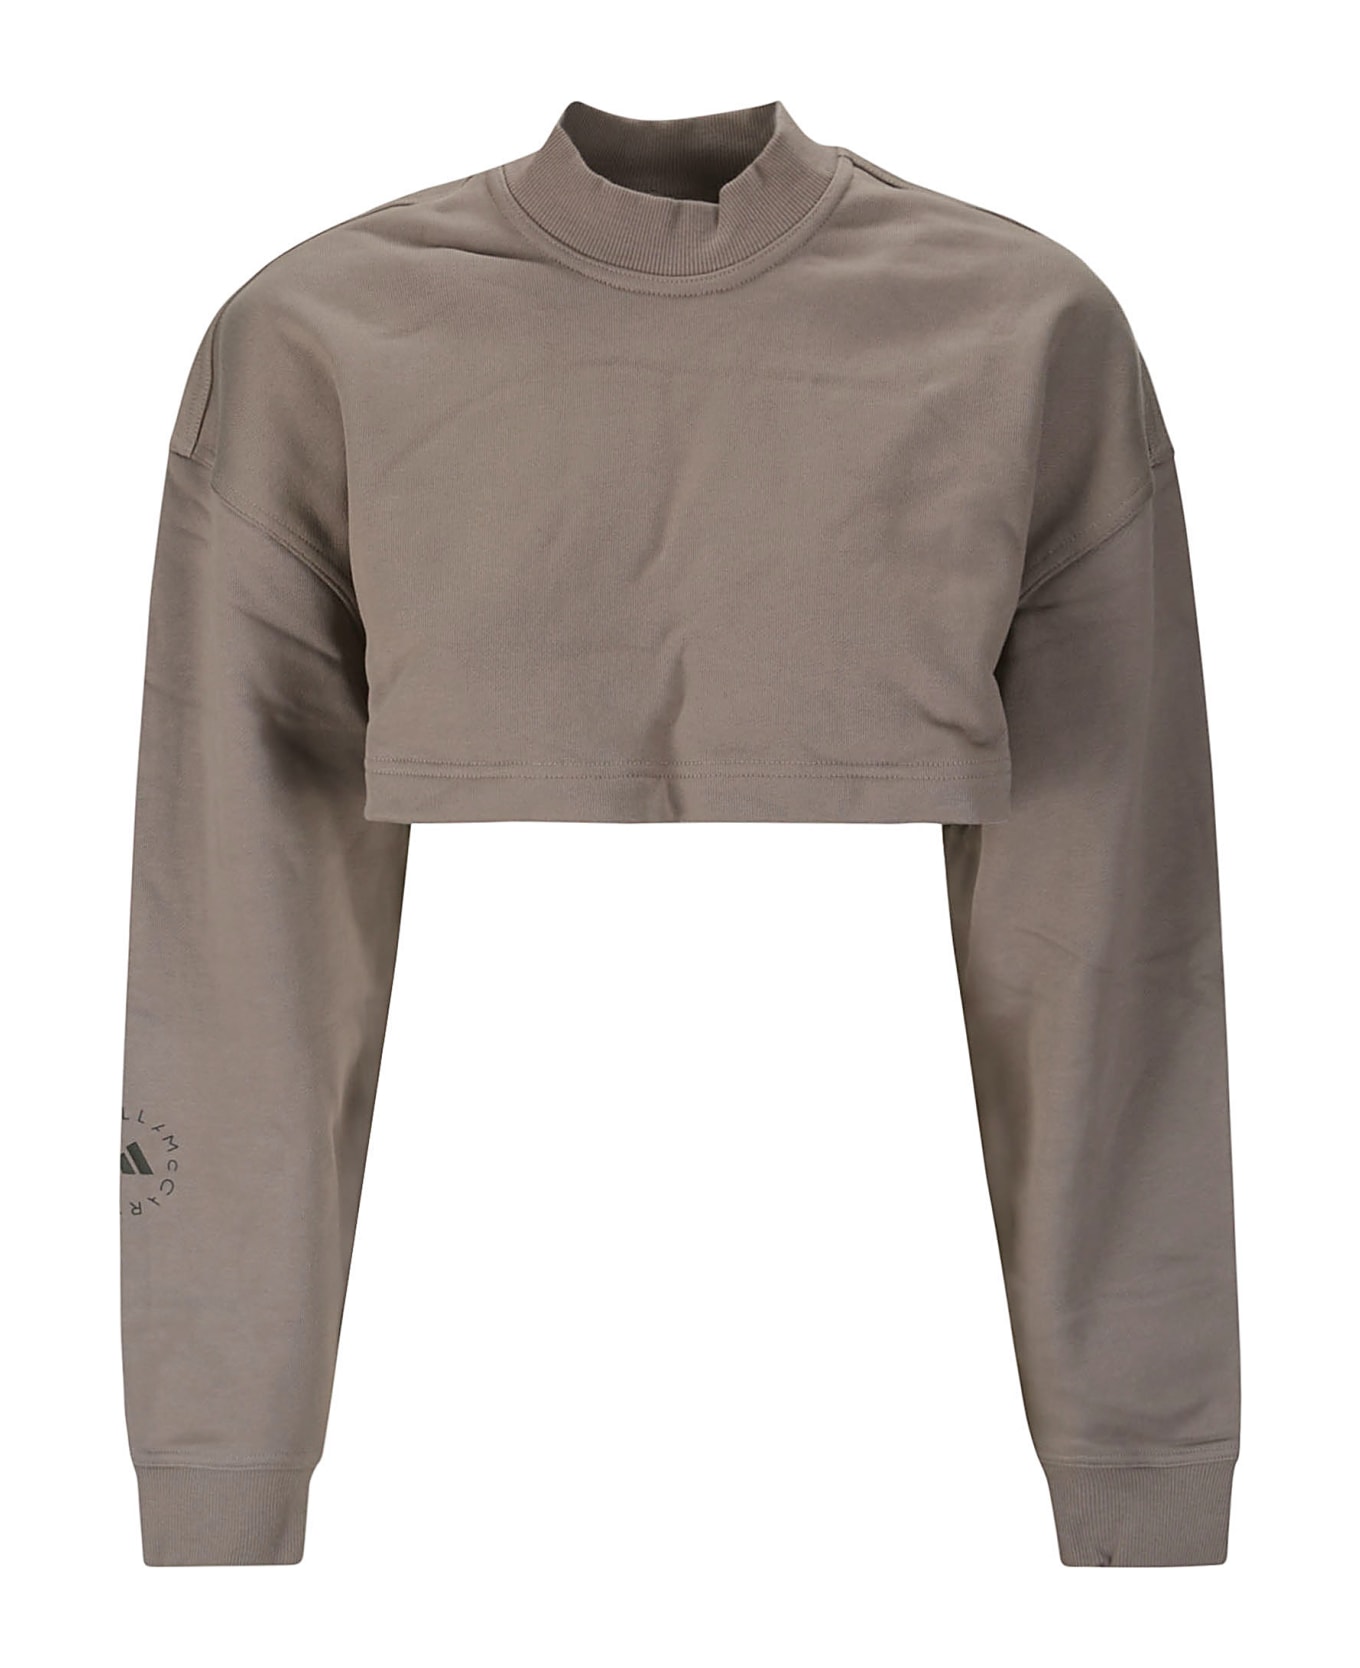 Adidas by Stella McCartney Cut Out Detailed Cropped Sweatshirt - TECH EARTH